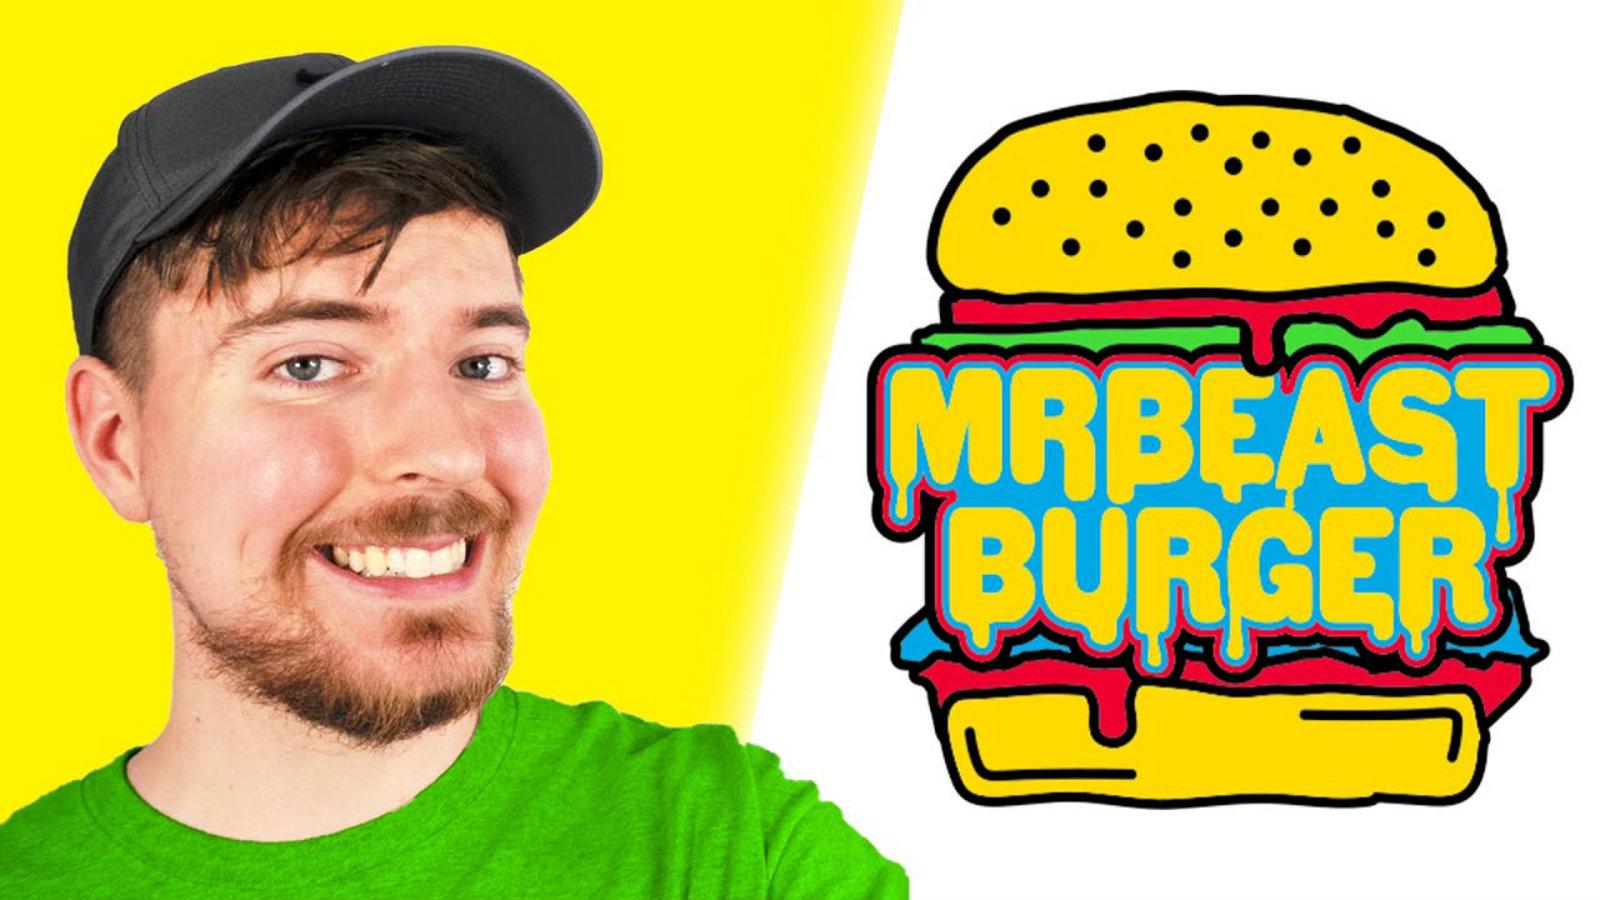 Mr Beast Burger logo